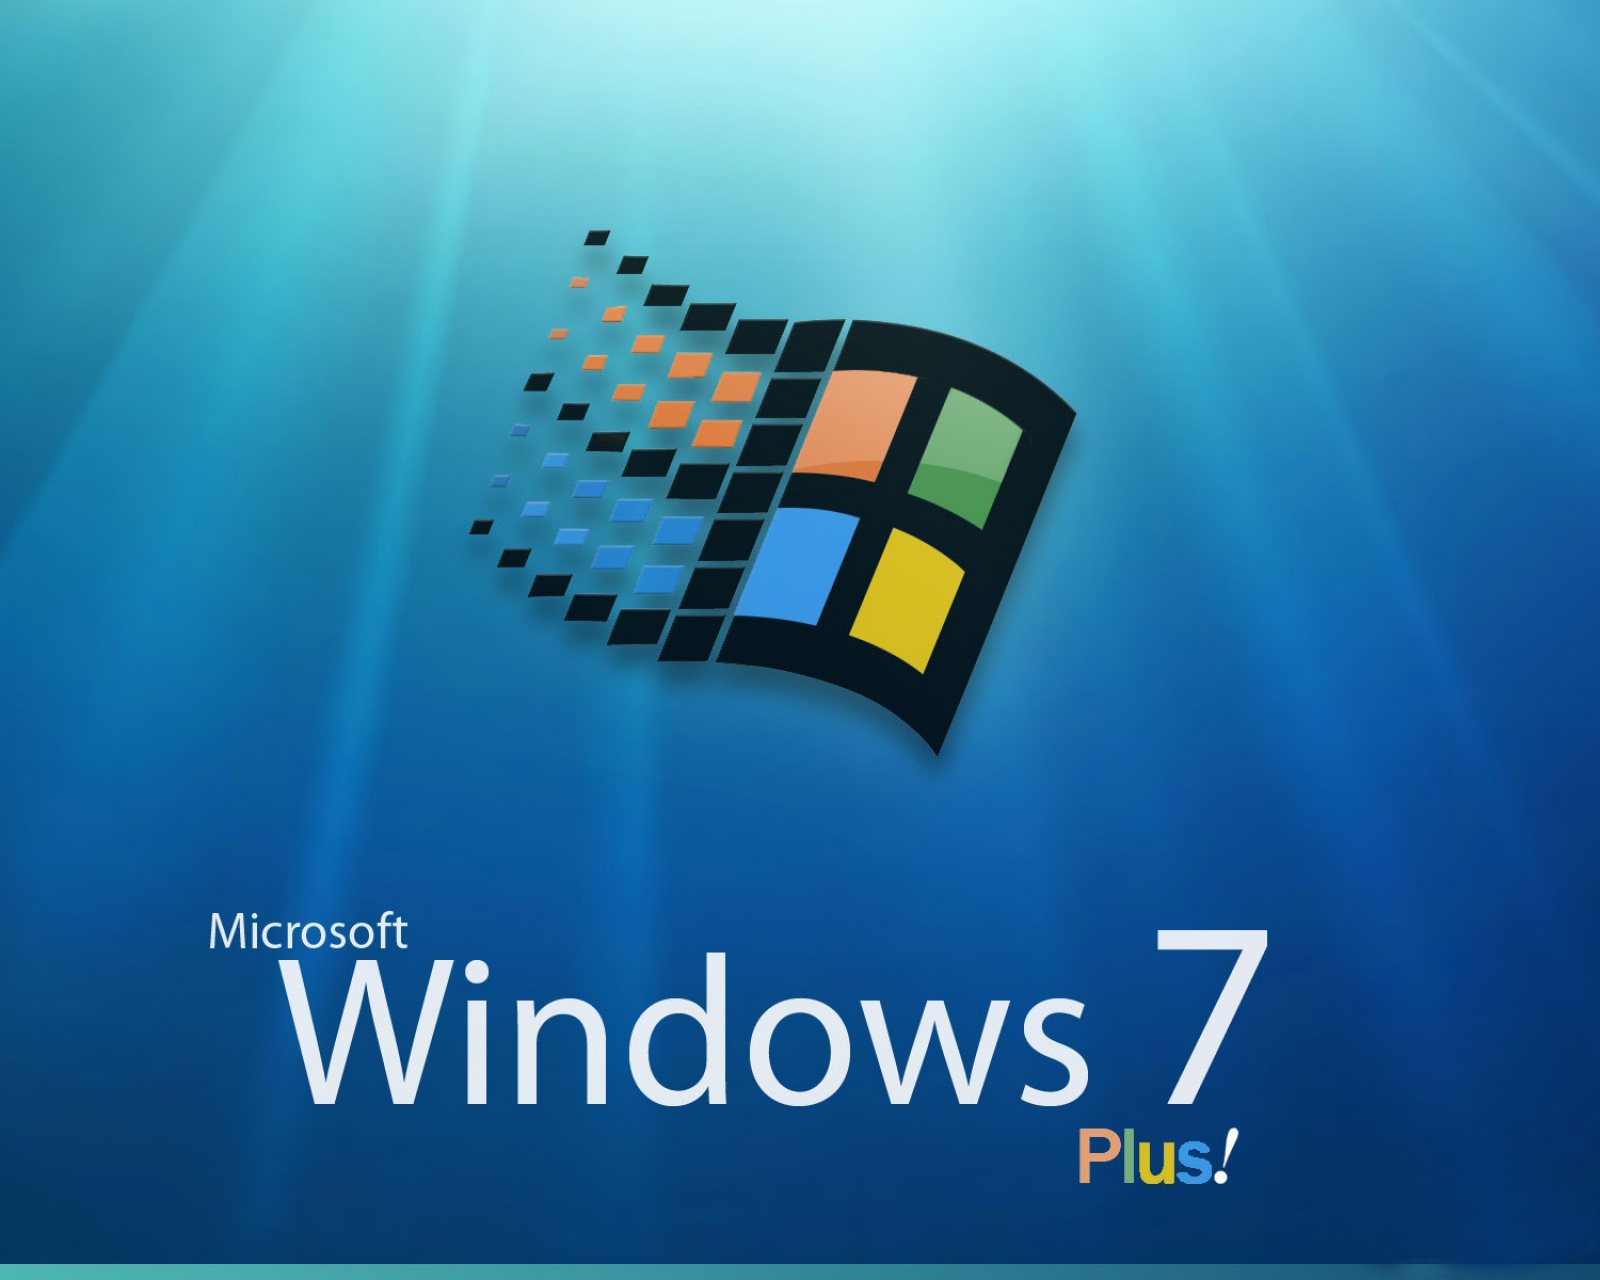 Windows 7 In Windows 95 Image Windows 7 Hd Wallpaper Backgrounds Download